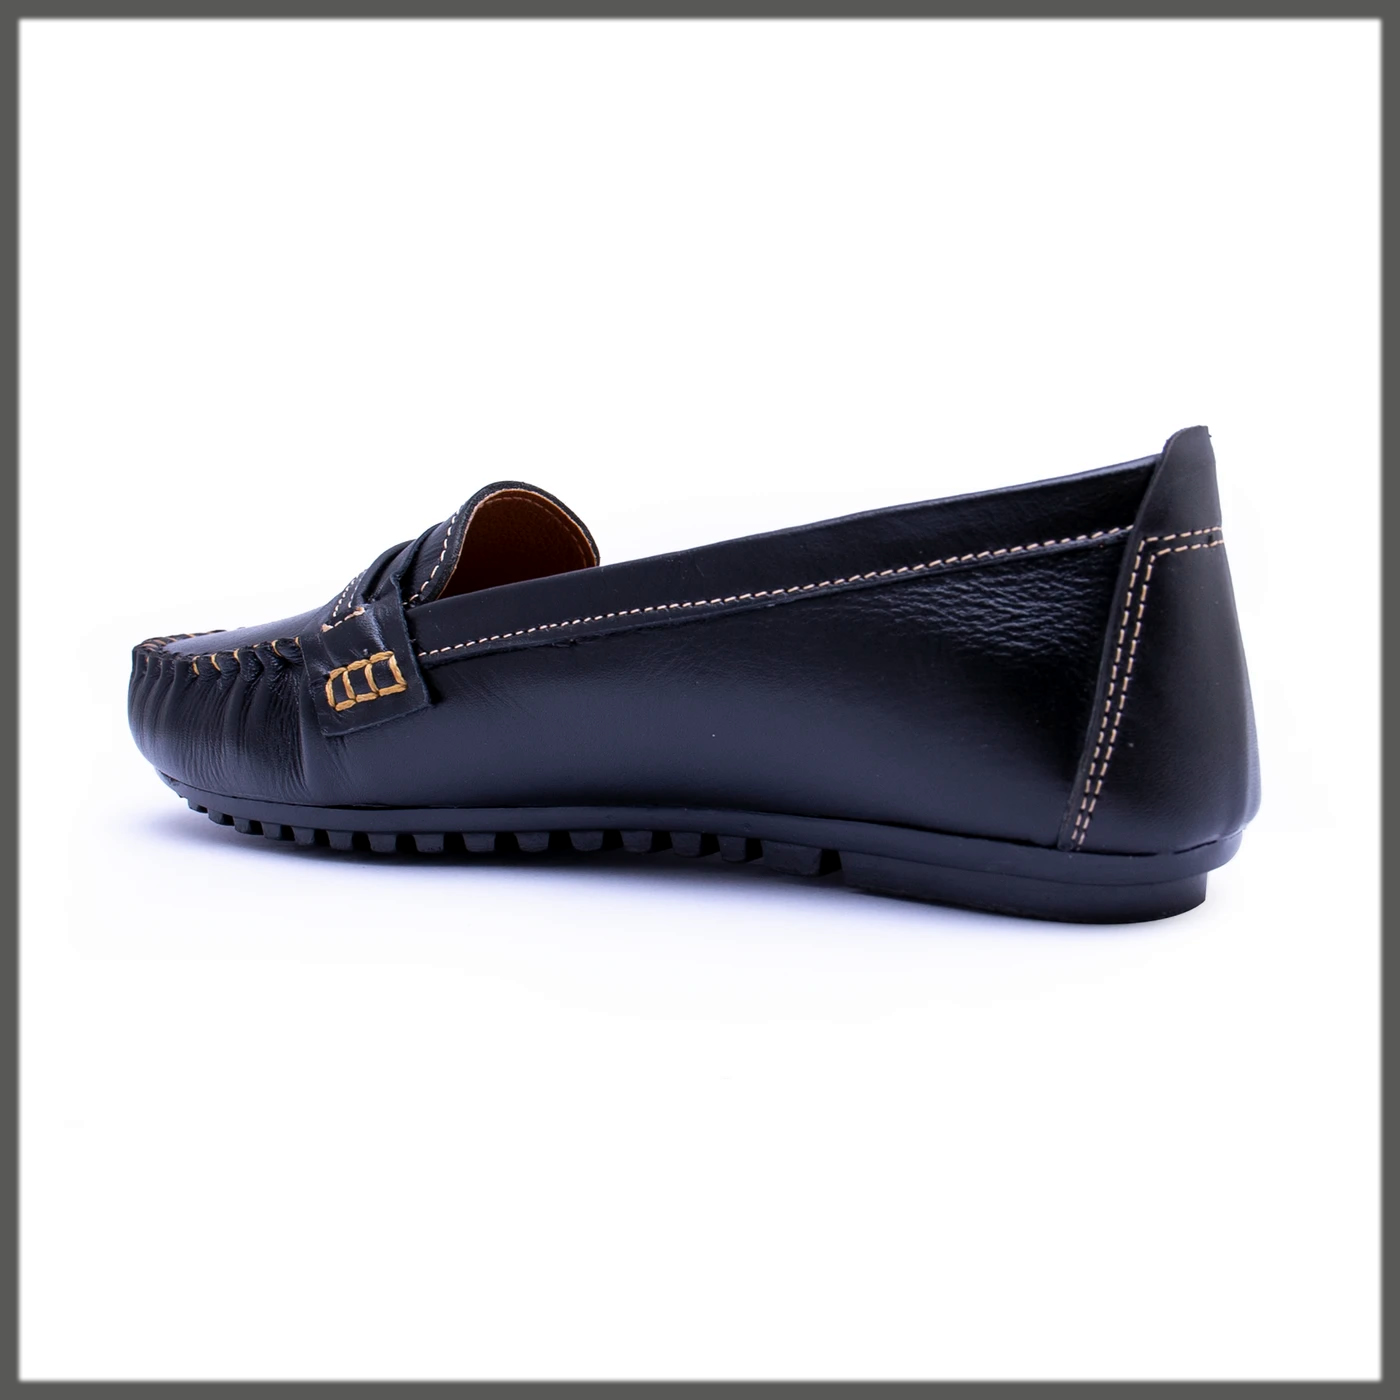 sleek black heels shoes winter collection